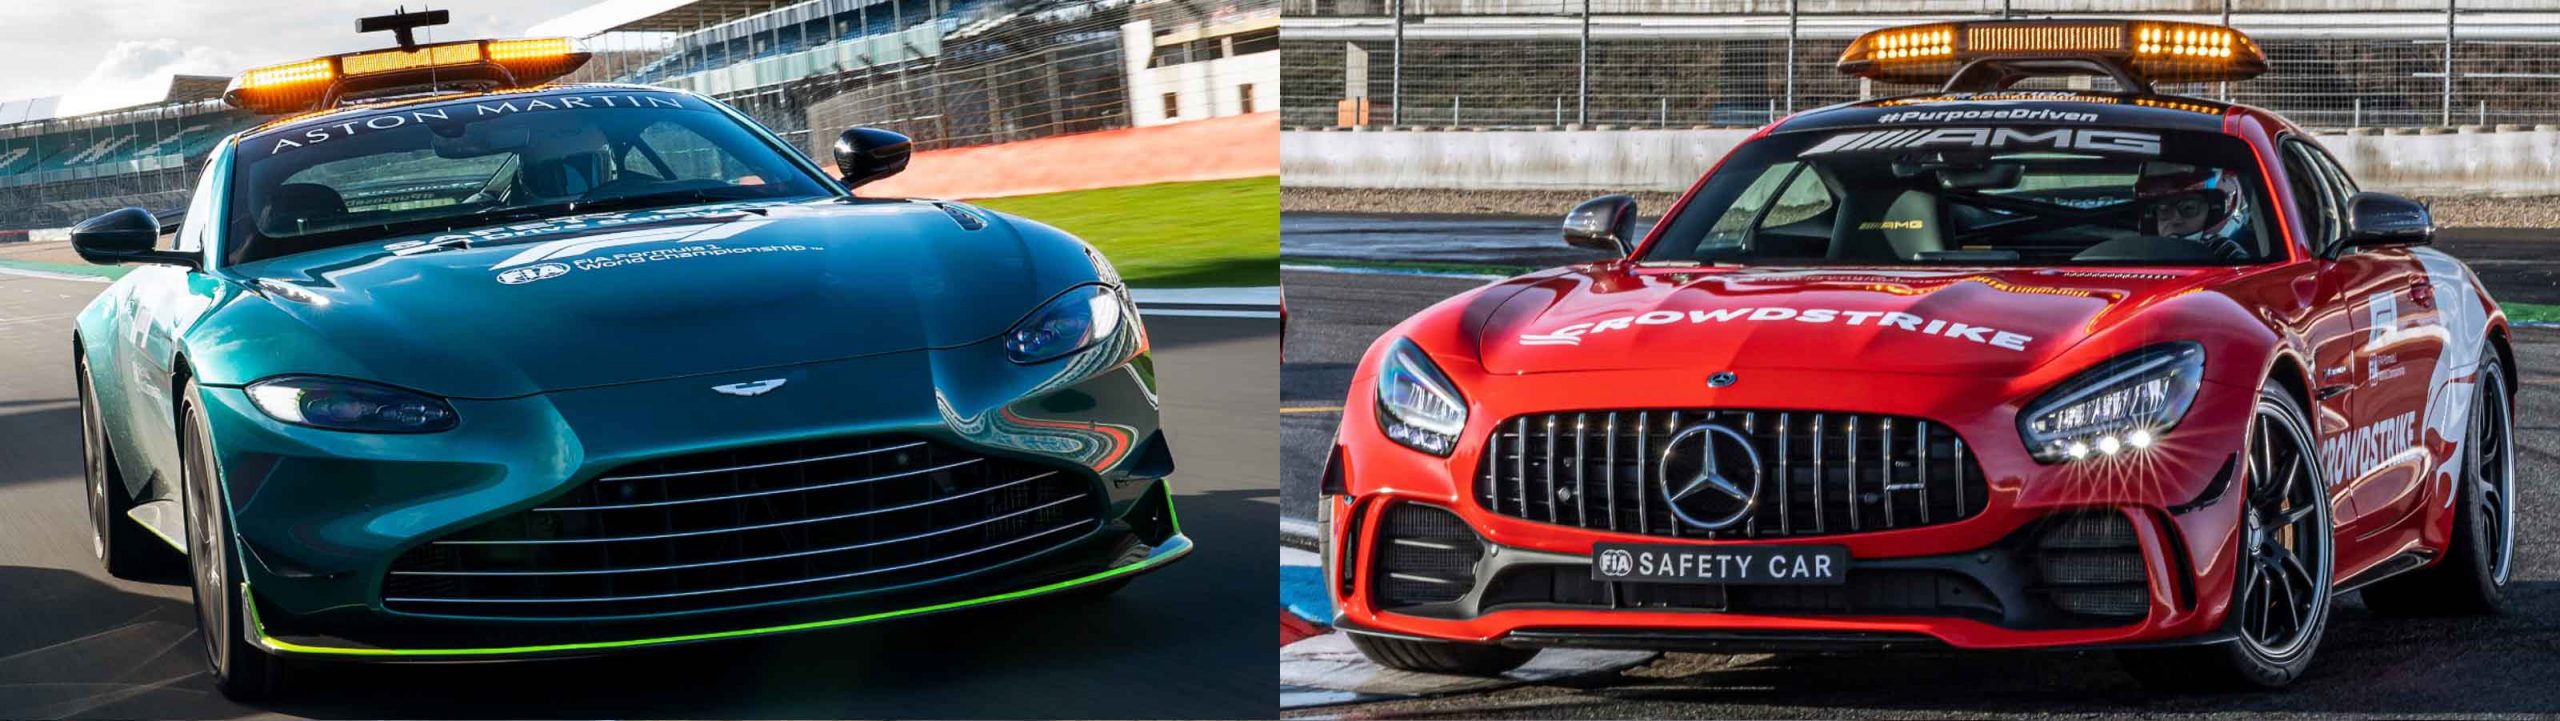 F1 Safety Cars - Aston Martin Vantage & Mercedes AMG GT R